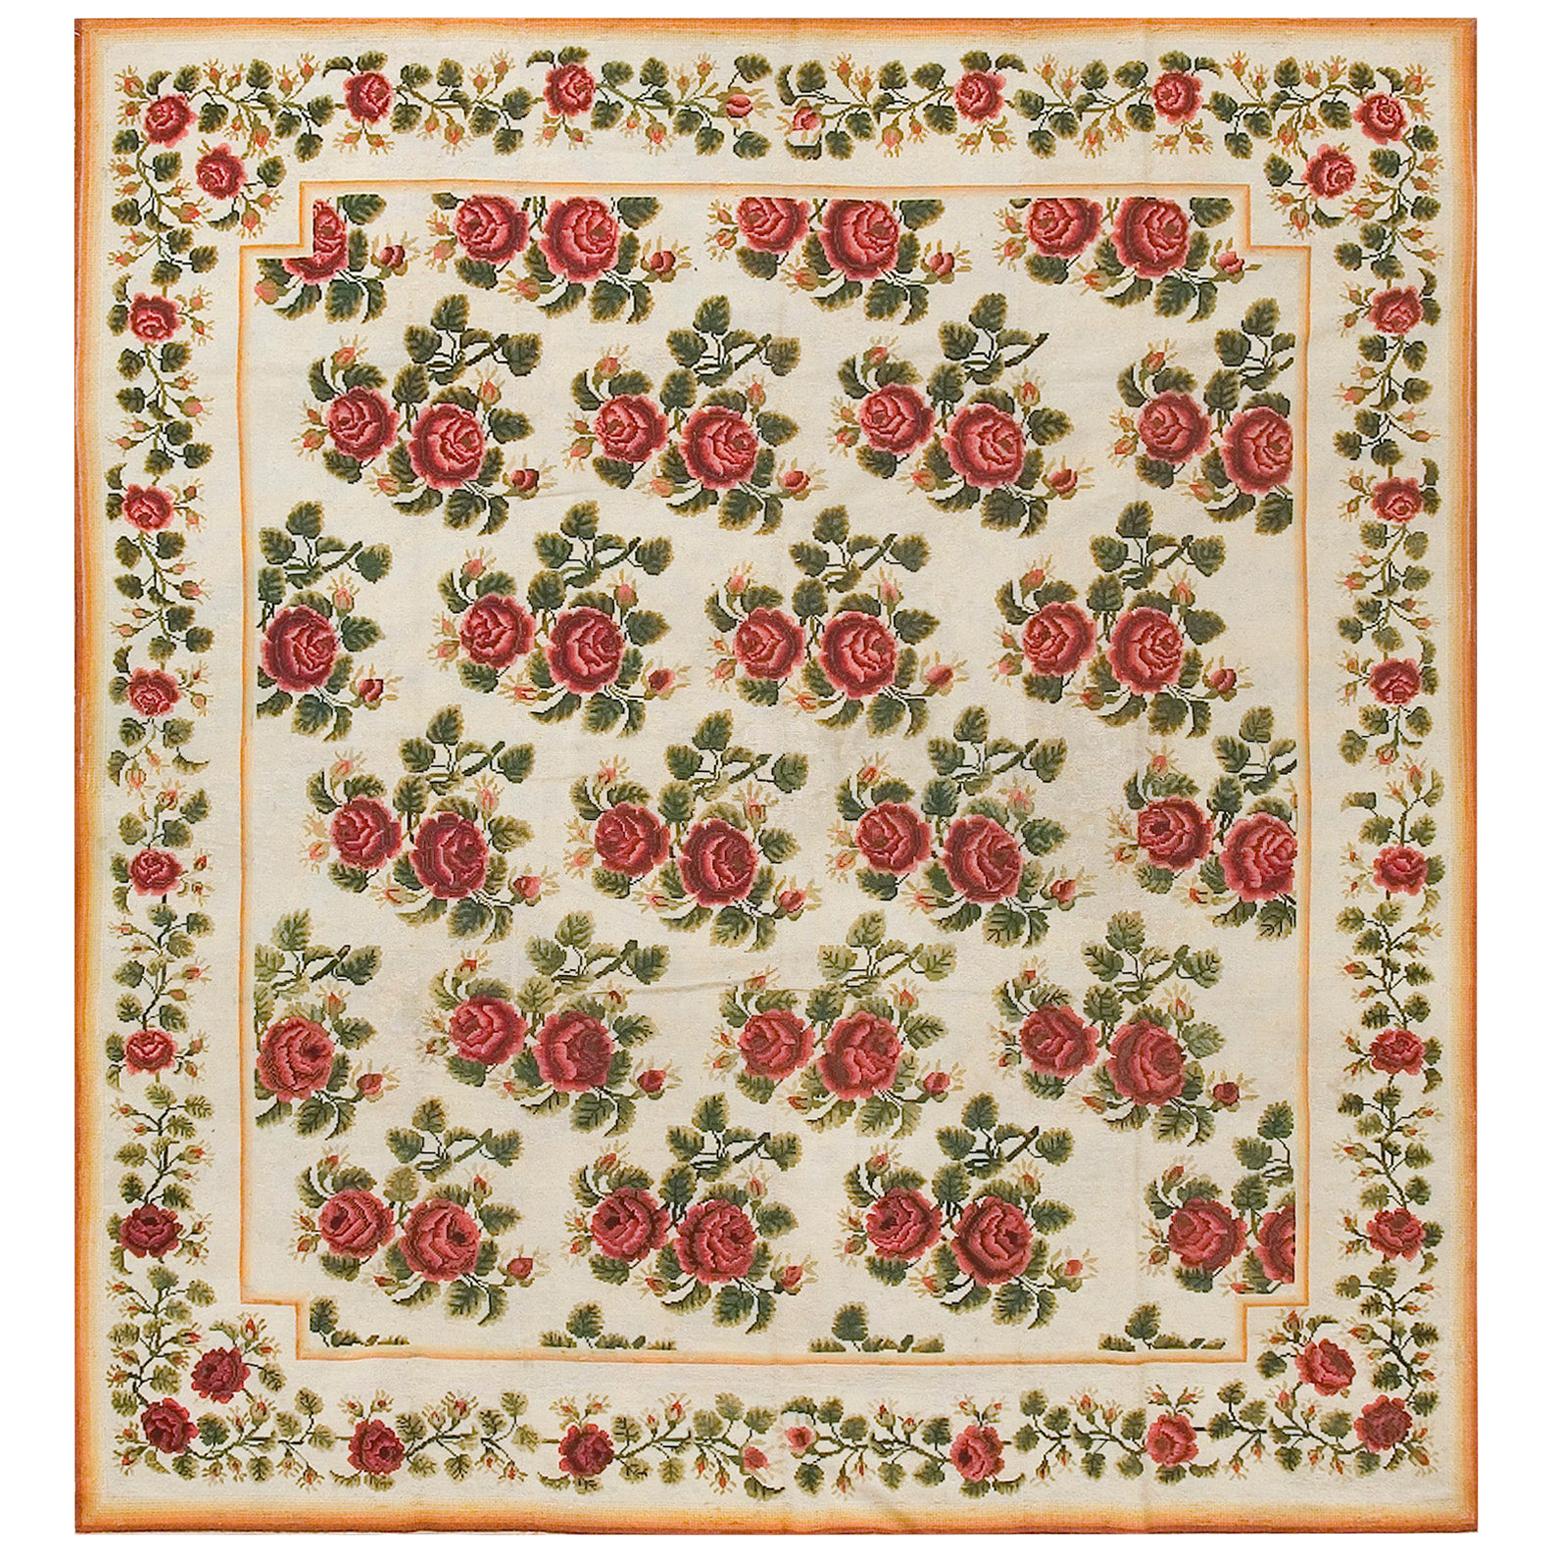 19th Century English Needlepoint Carpet ( 6'10" x 7'6" - 208 x 230 ) For Sale